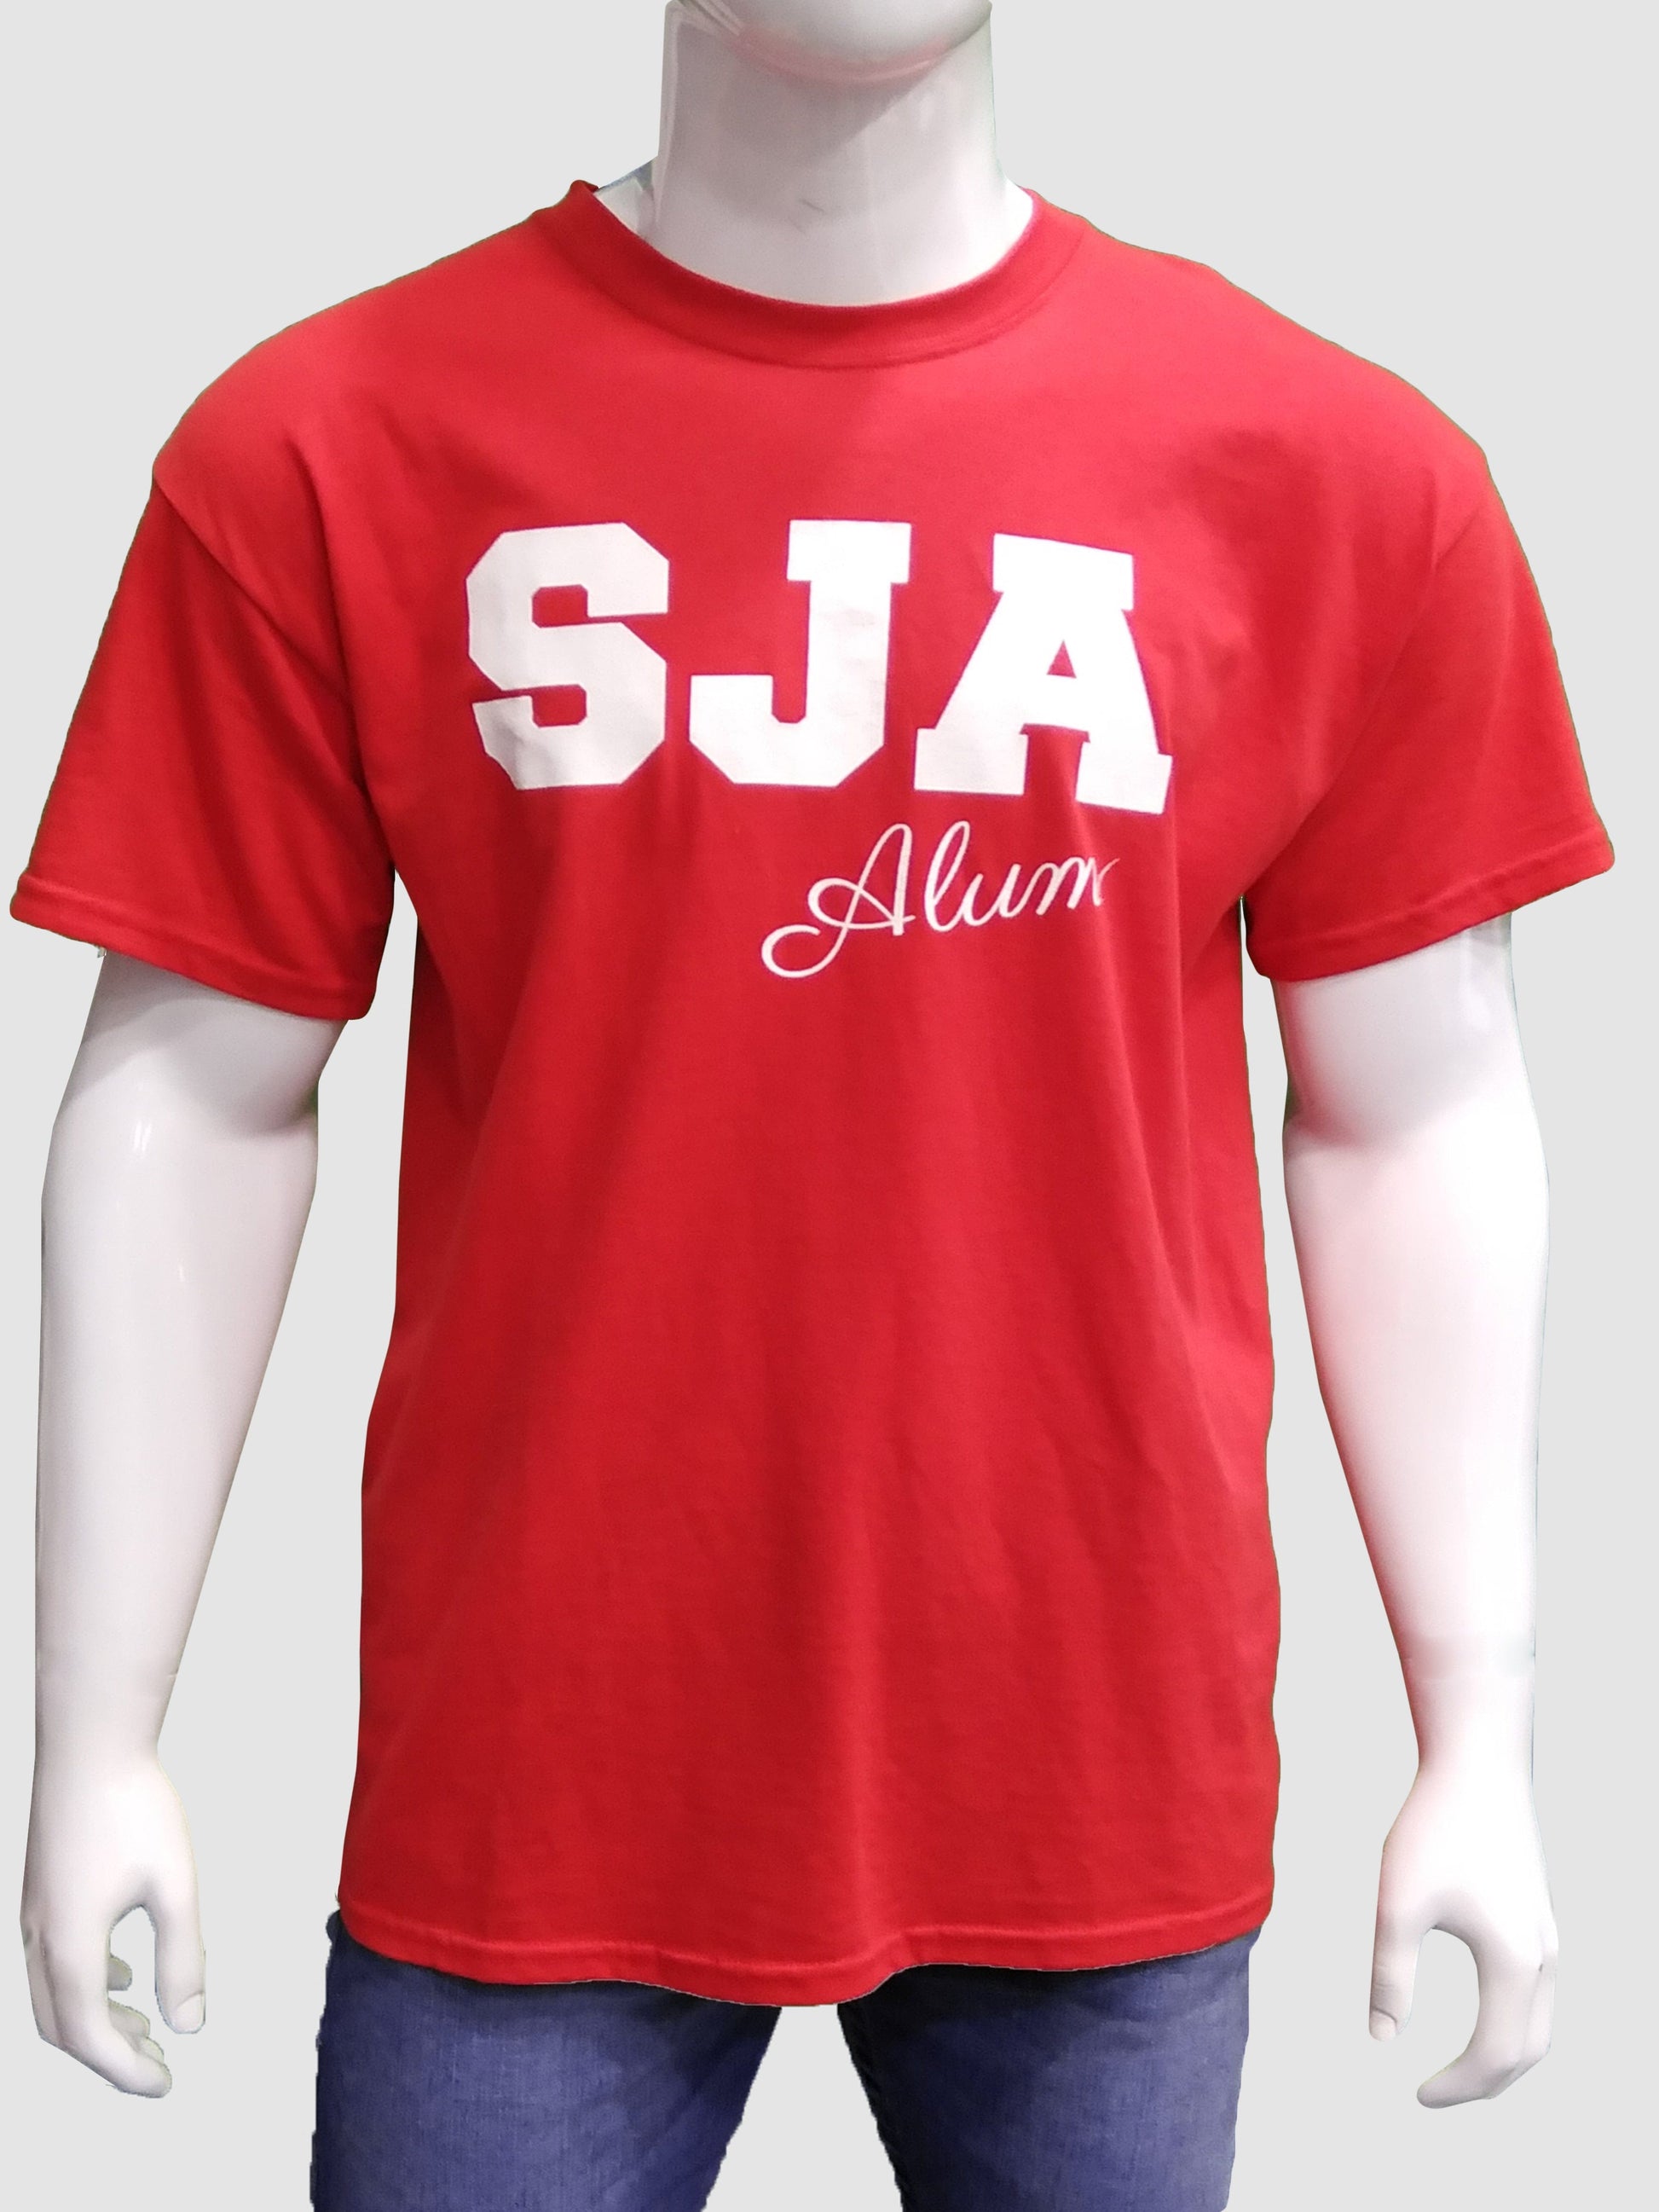 Gildan Mens Tops Large / Red Short Sleeve T-Shirt